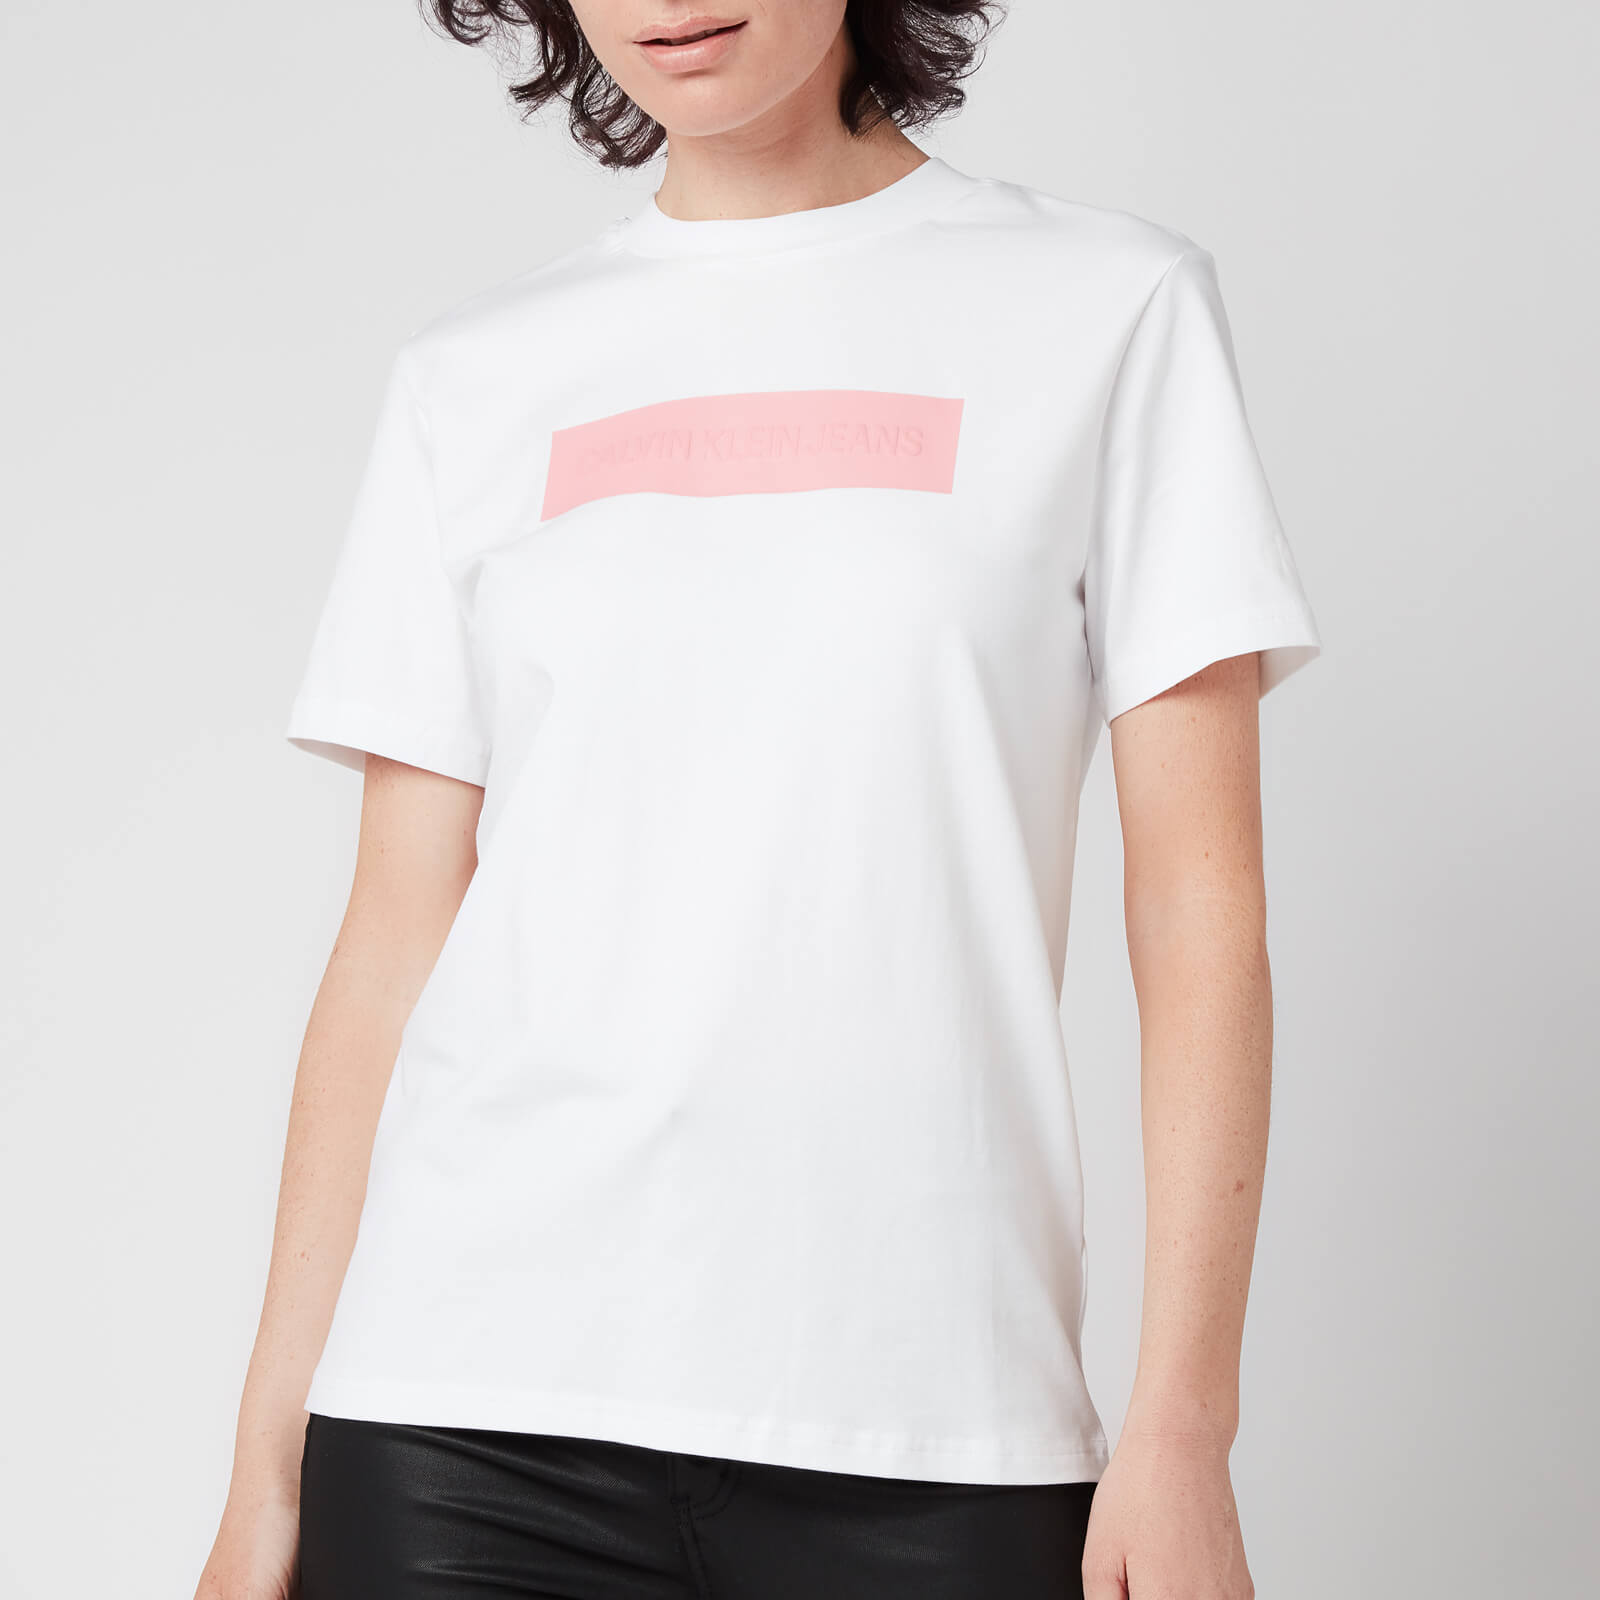 Calvin Klein Jeans Women's Hero Logo T-Shirt - Bright White/Soft Berry - XS